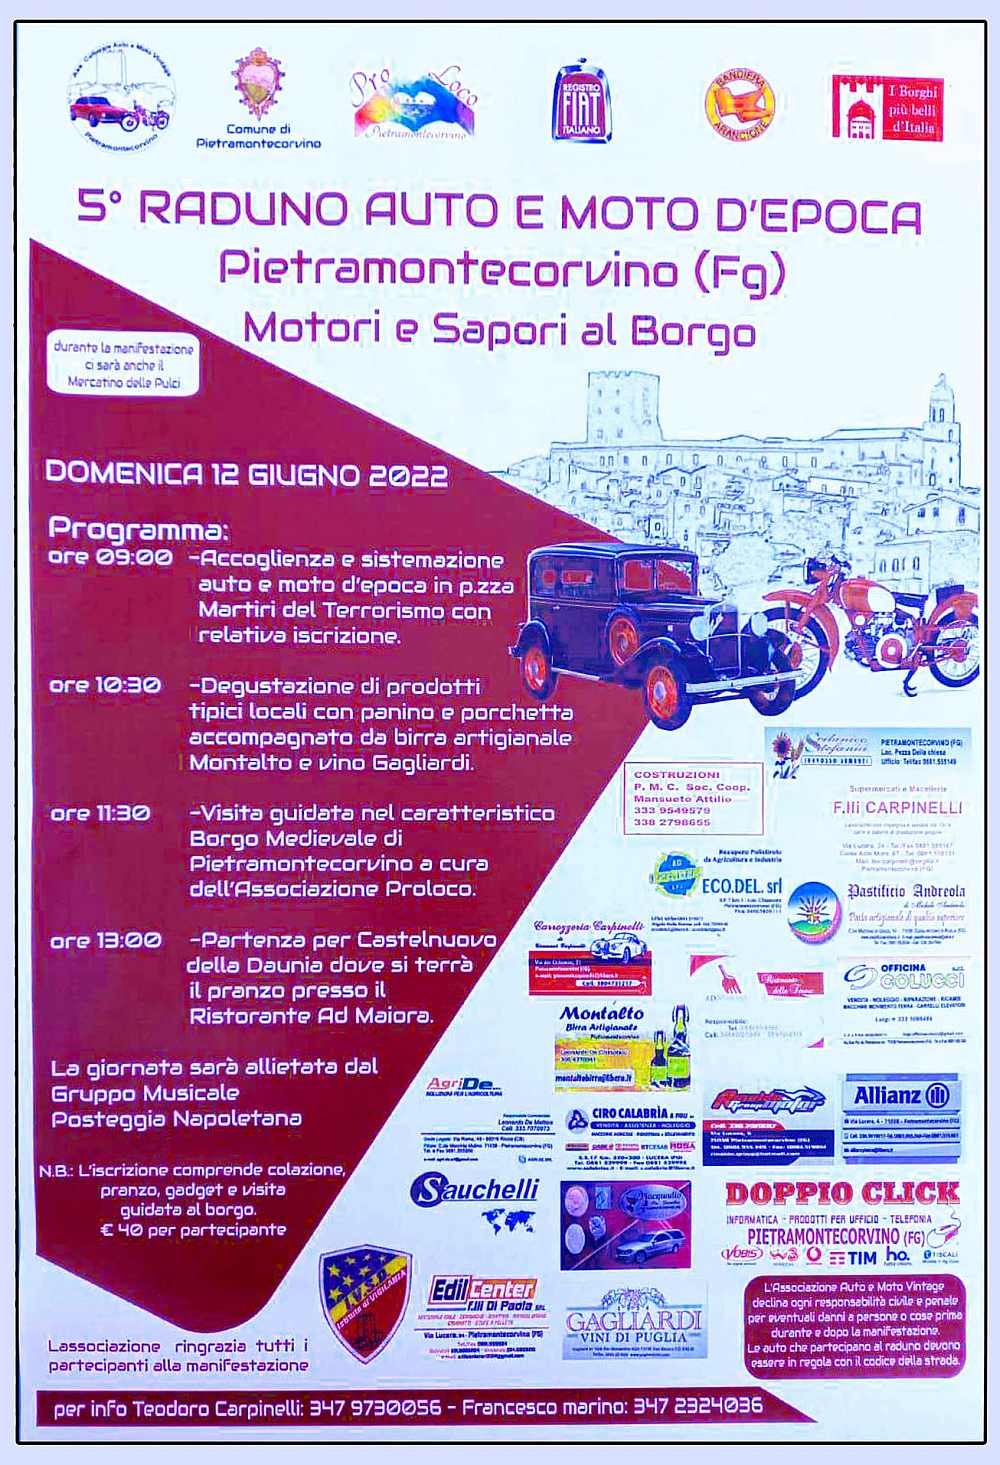 Pietramontecorvino (FG)
"Motori e Sapori al Borgo"
12 Giugno 2022 